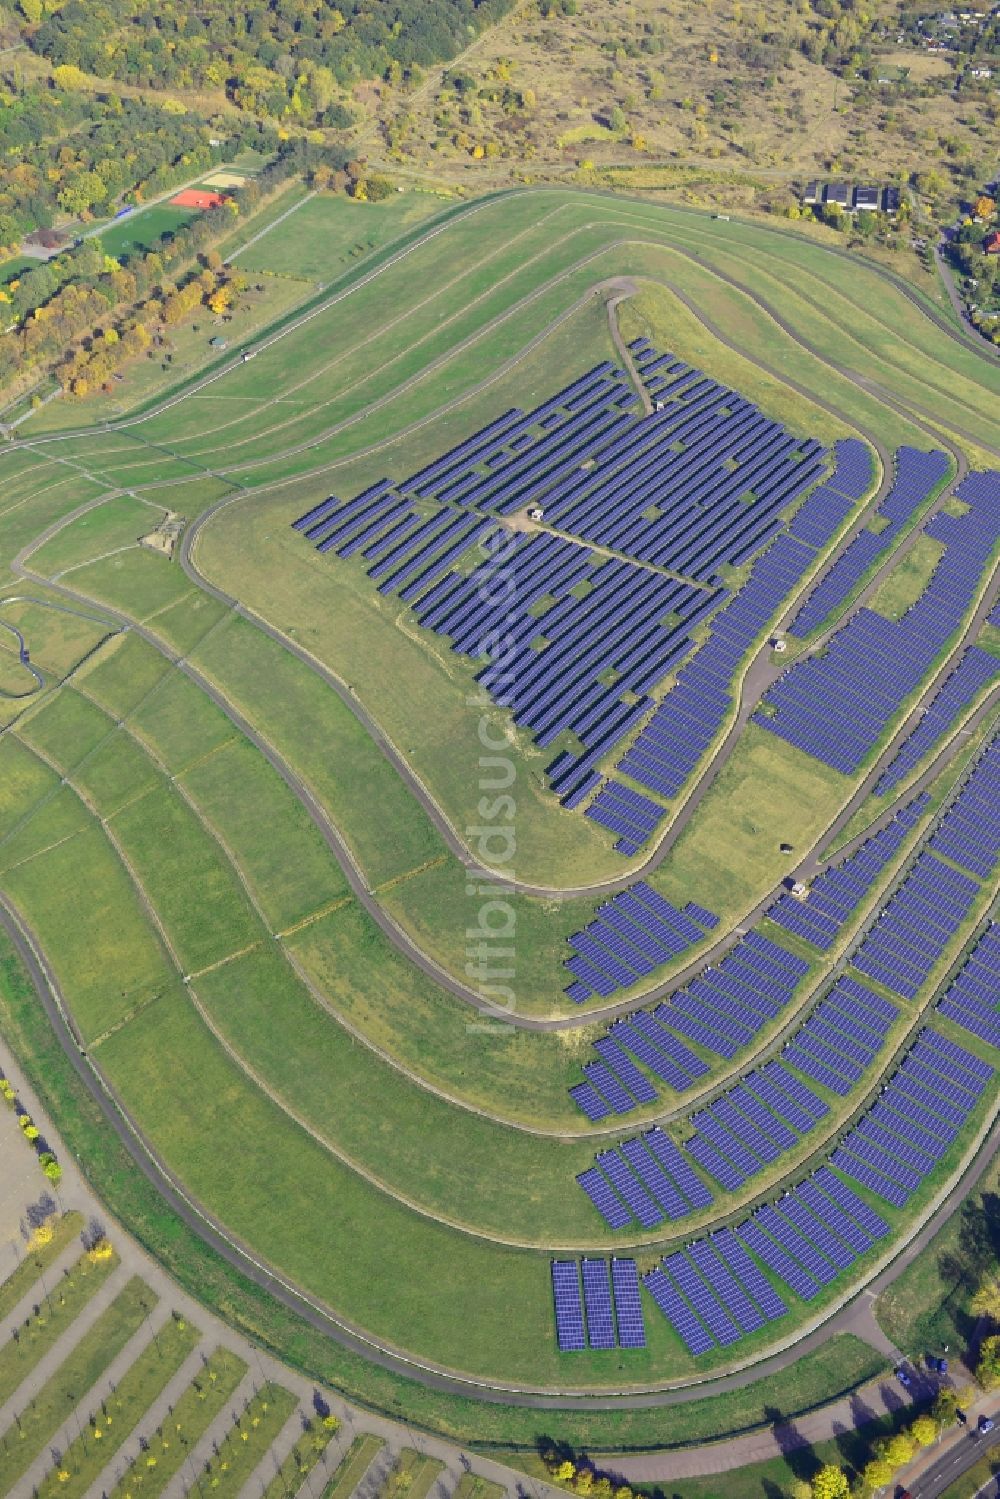 Luftaufnahme Magdeburg - Blick auf den Solarpark Magdeburg im Bundesland Sachsen-Anhalt